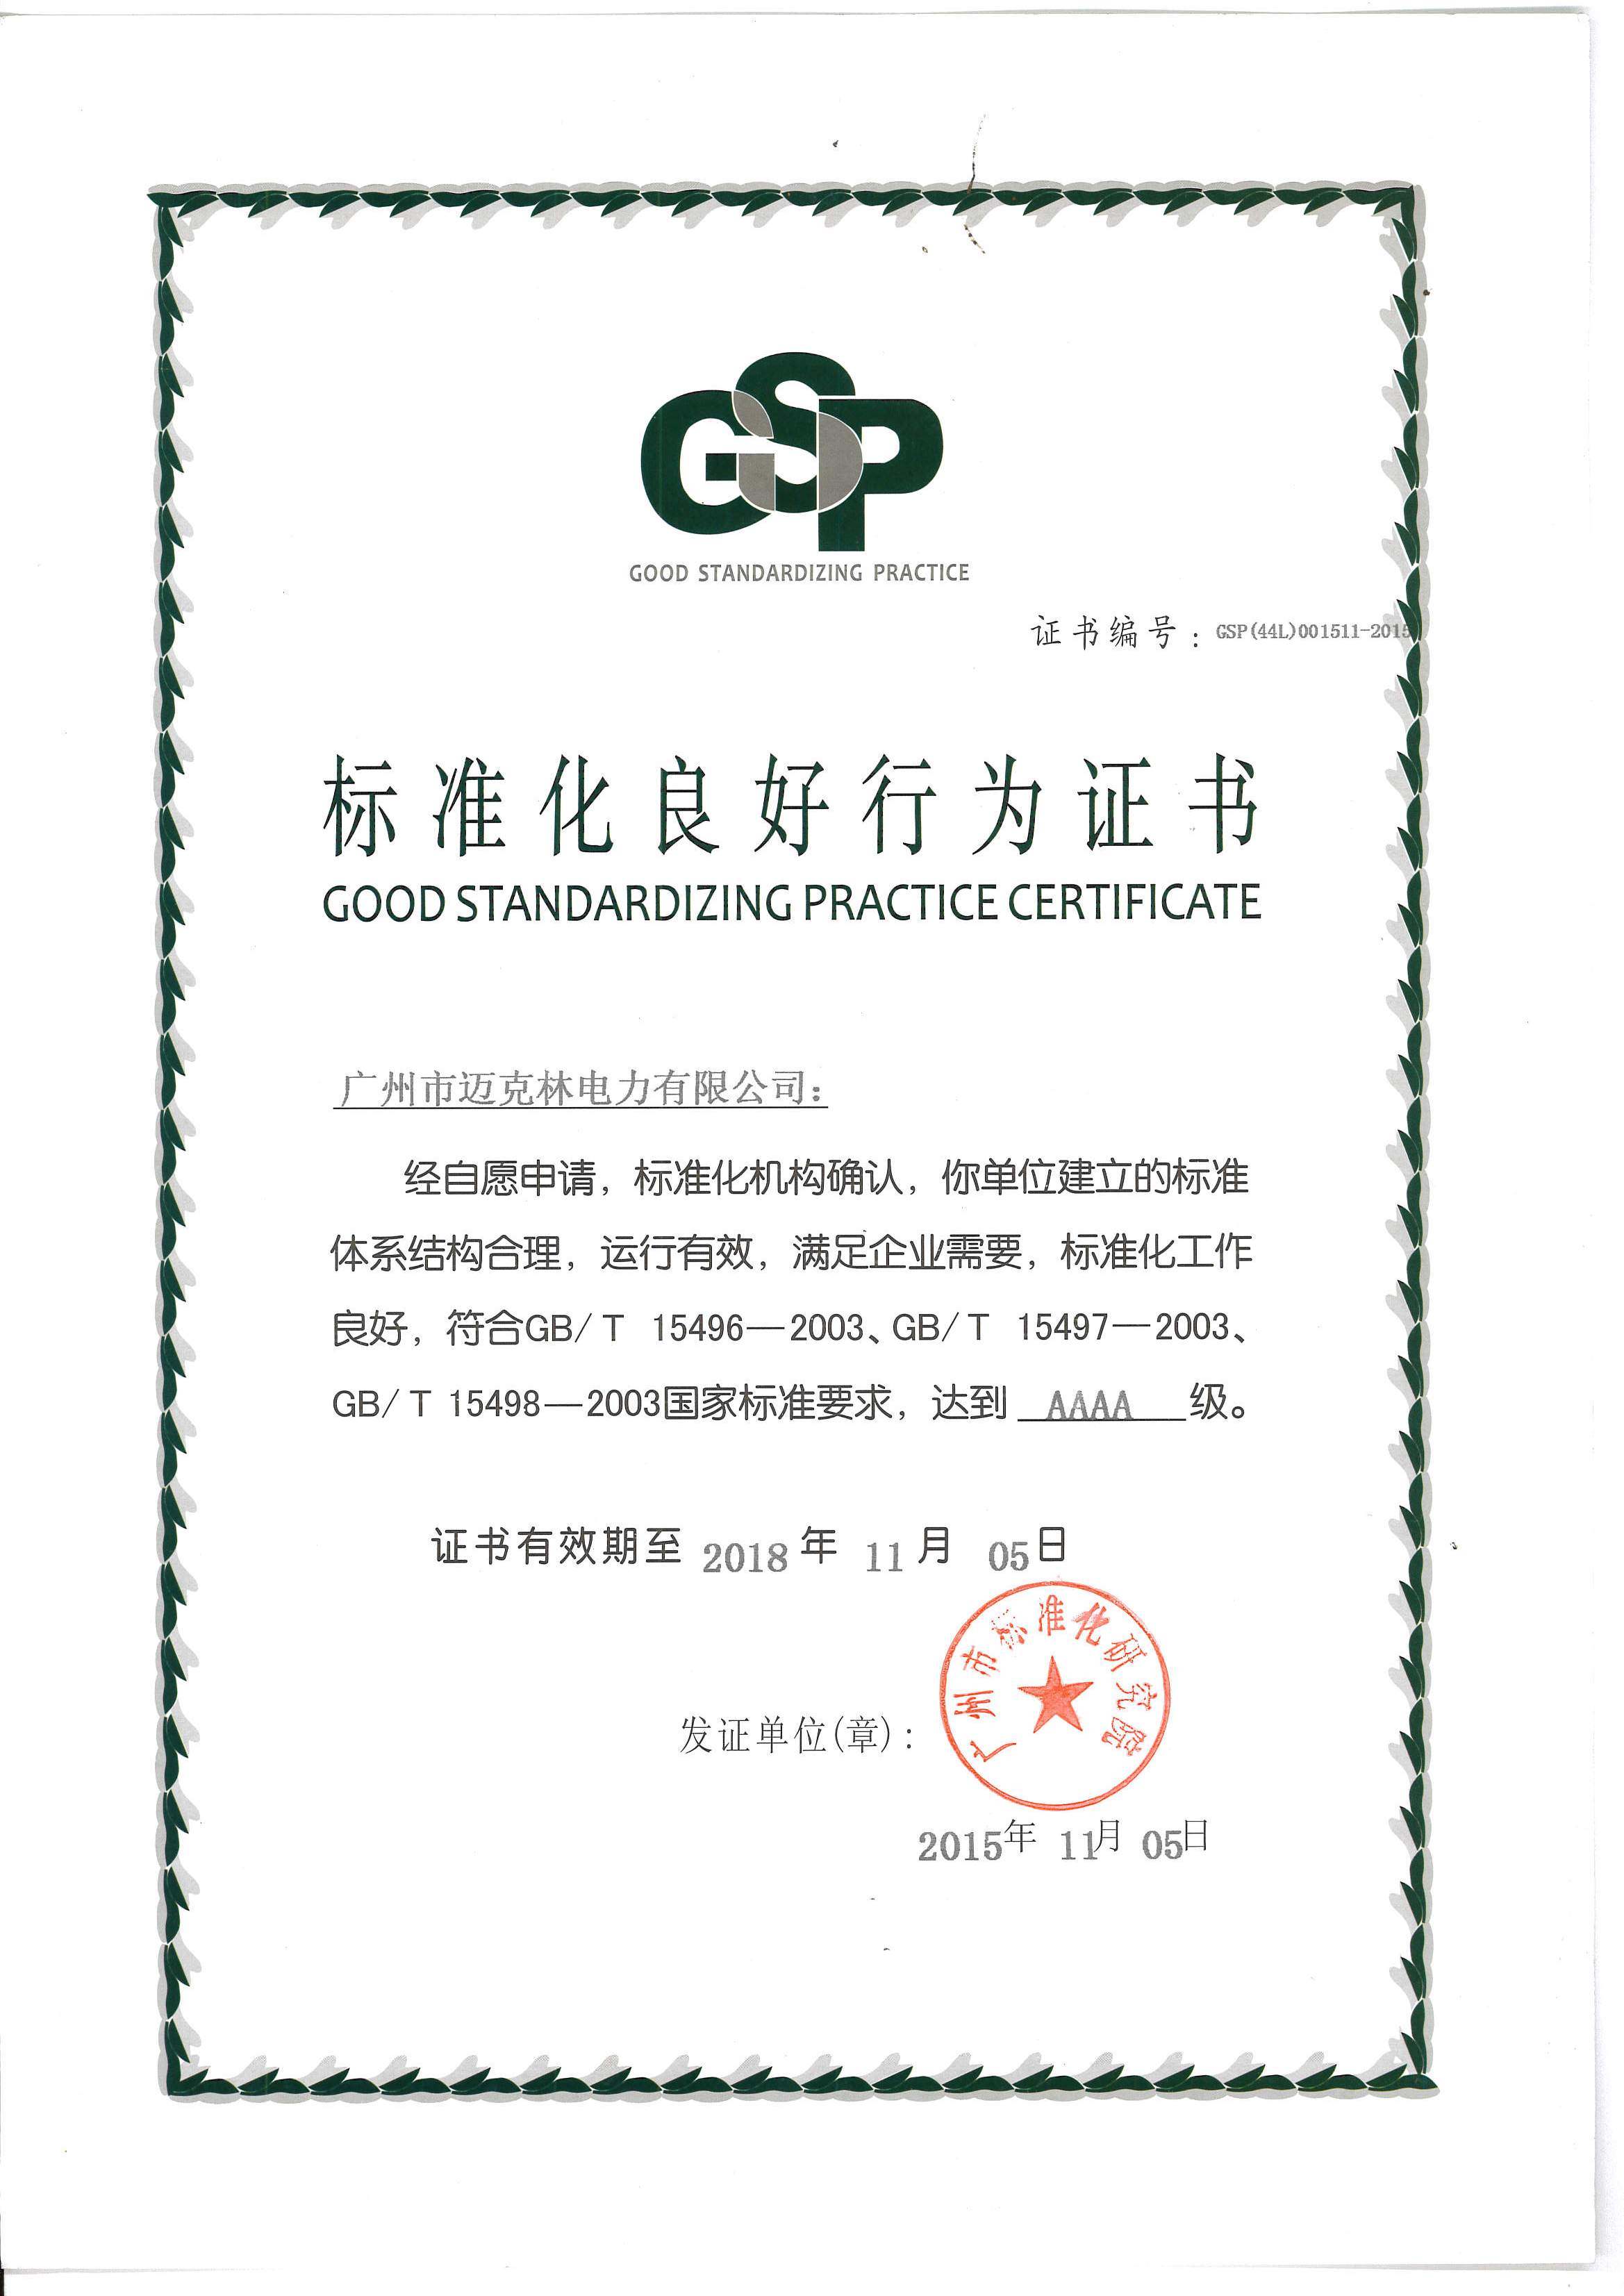 Good Standardizing Practice Certificate.